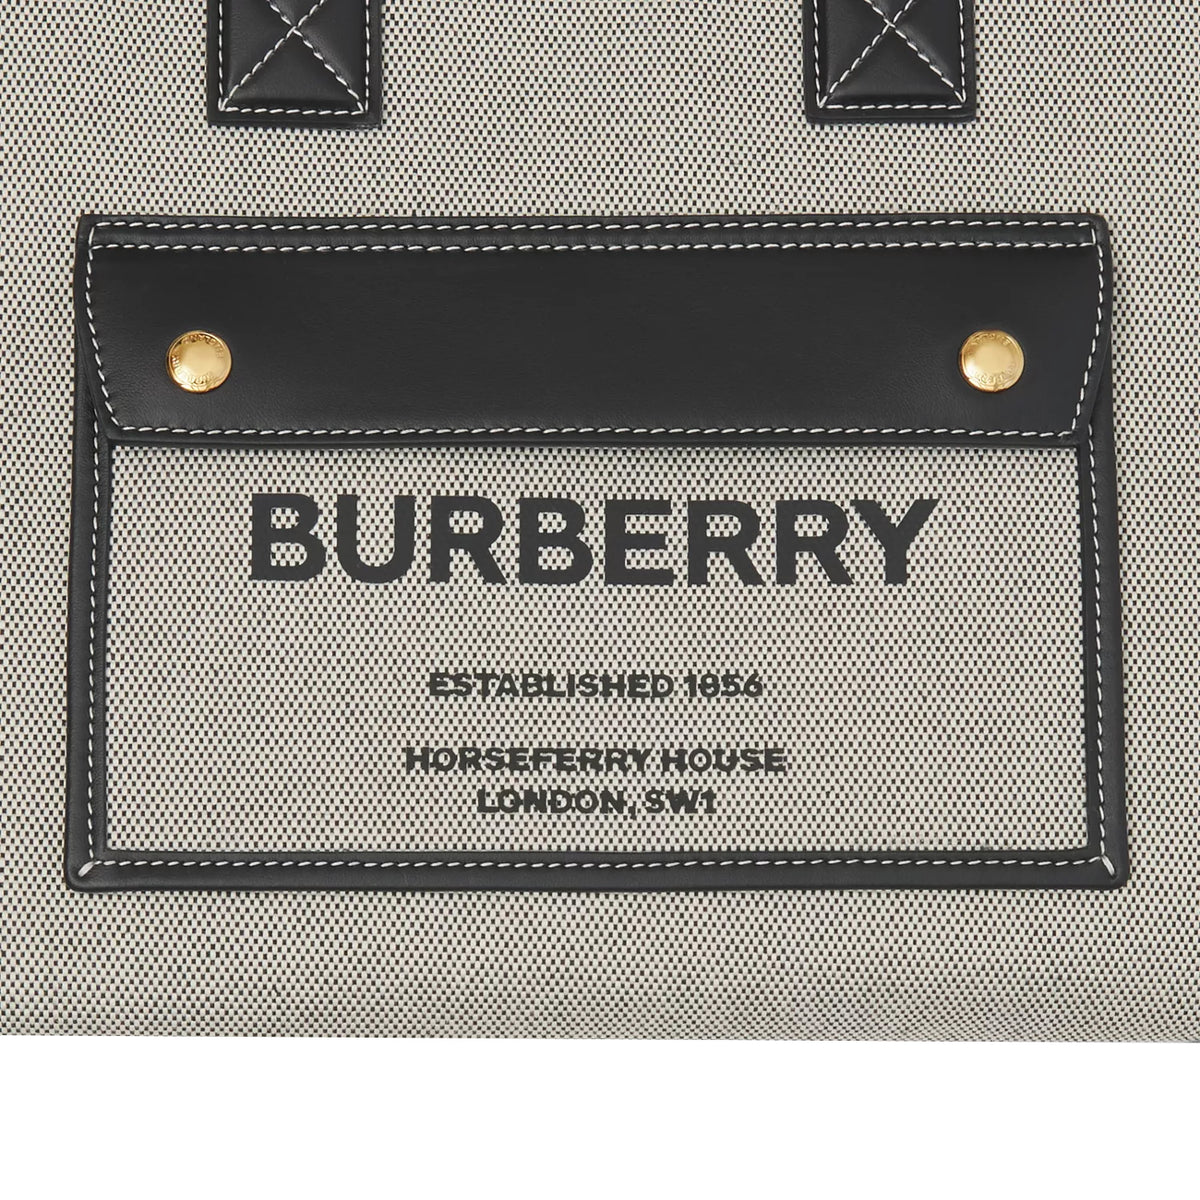 BURBERRY – Harrod Store